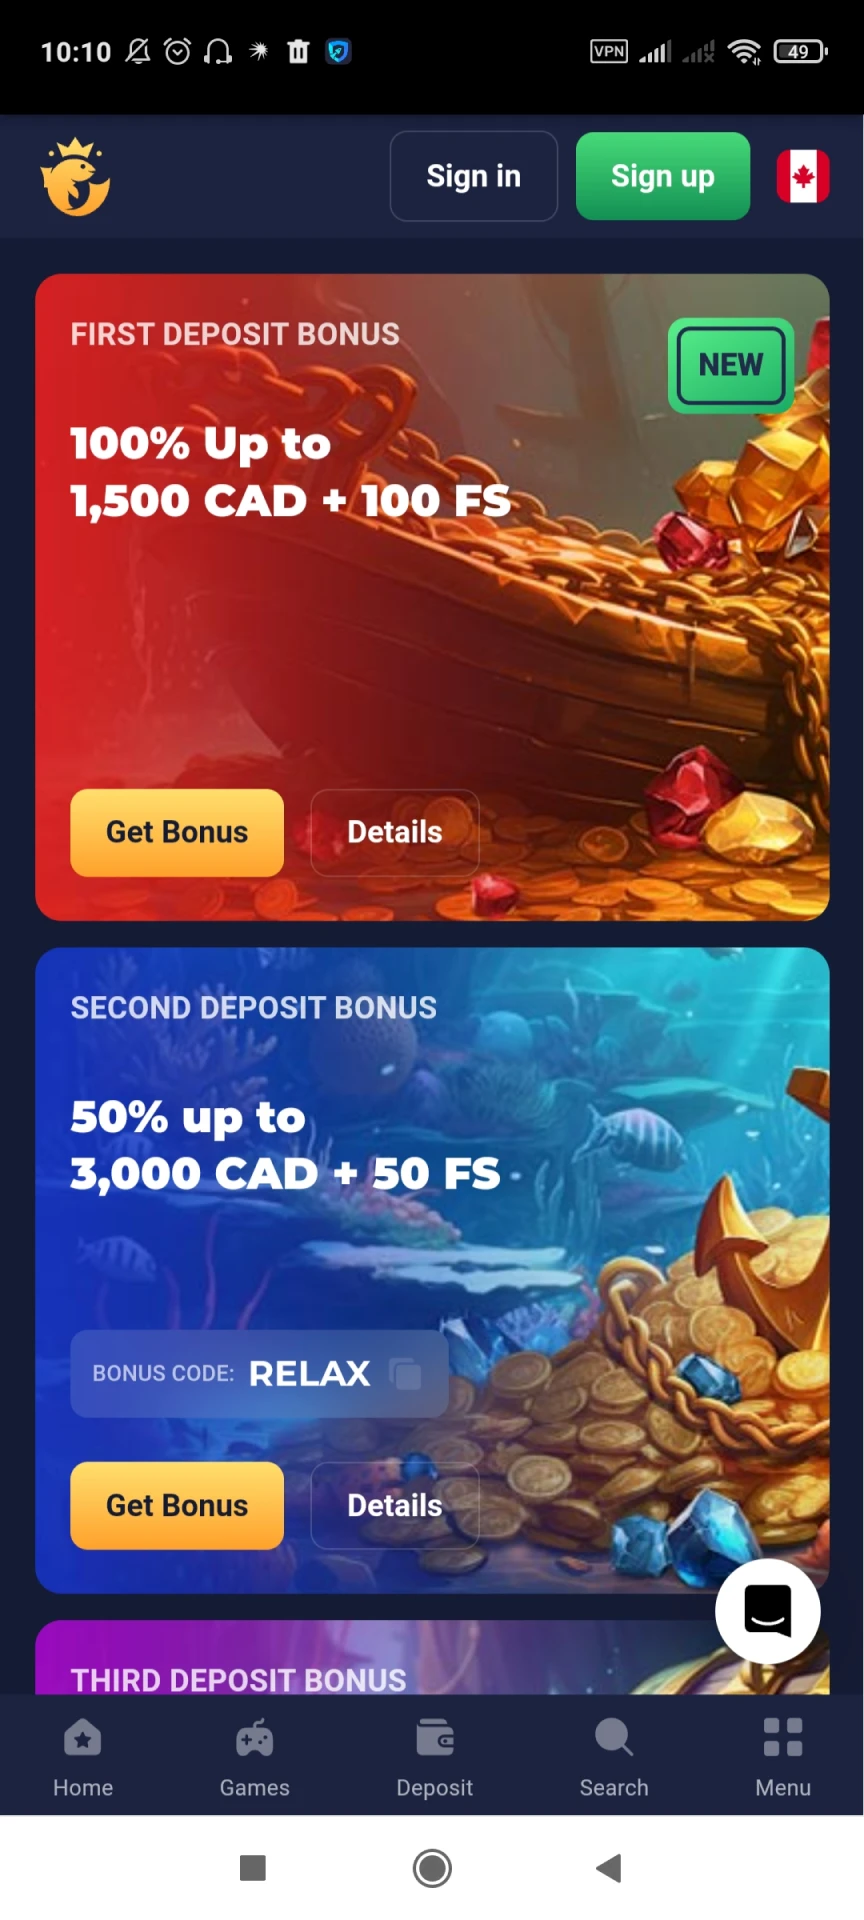 Visit the Joo Casino app bonuses page.